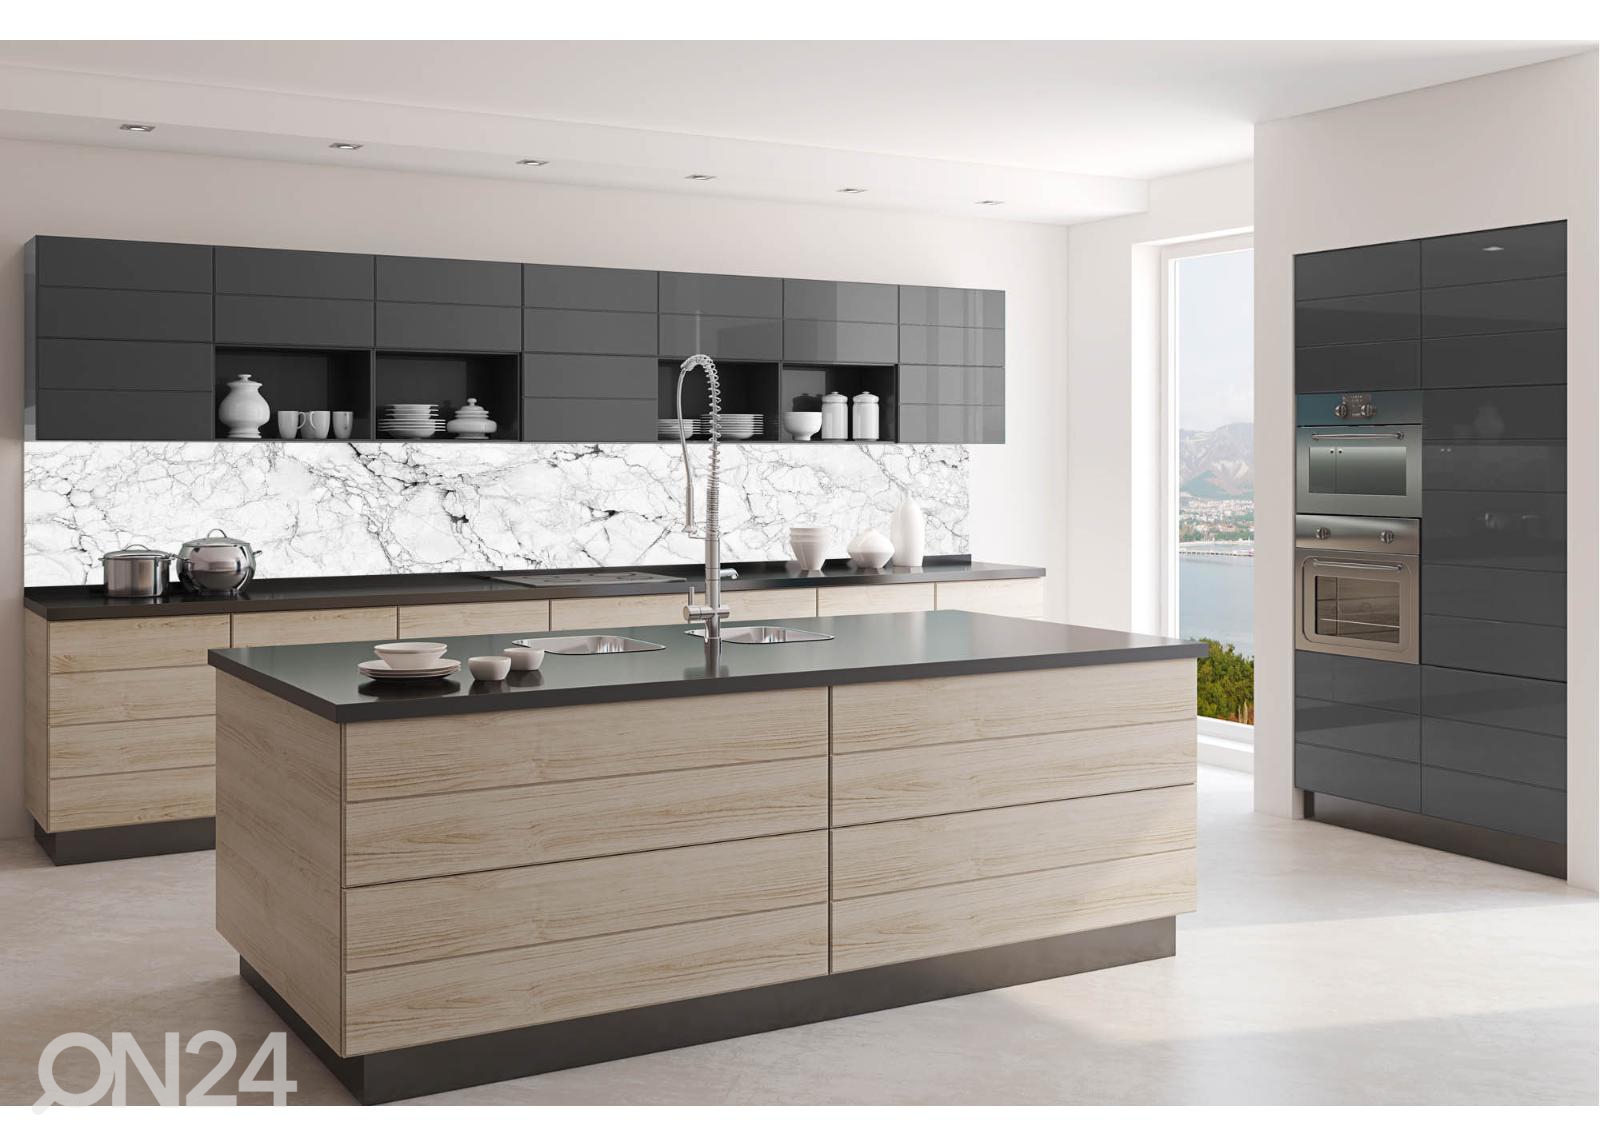 Кухонный фартук White marble stone texture 180x60 см увеличить